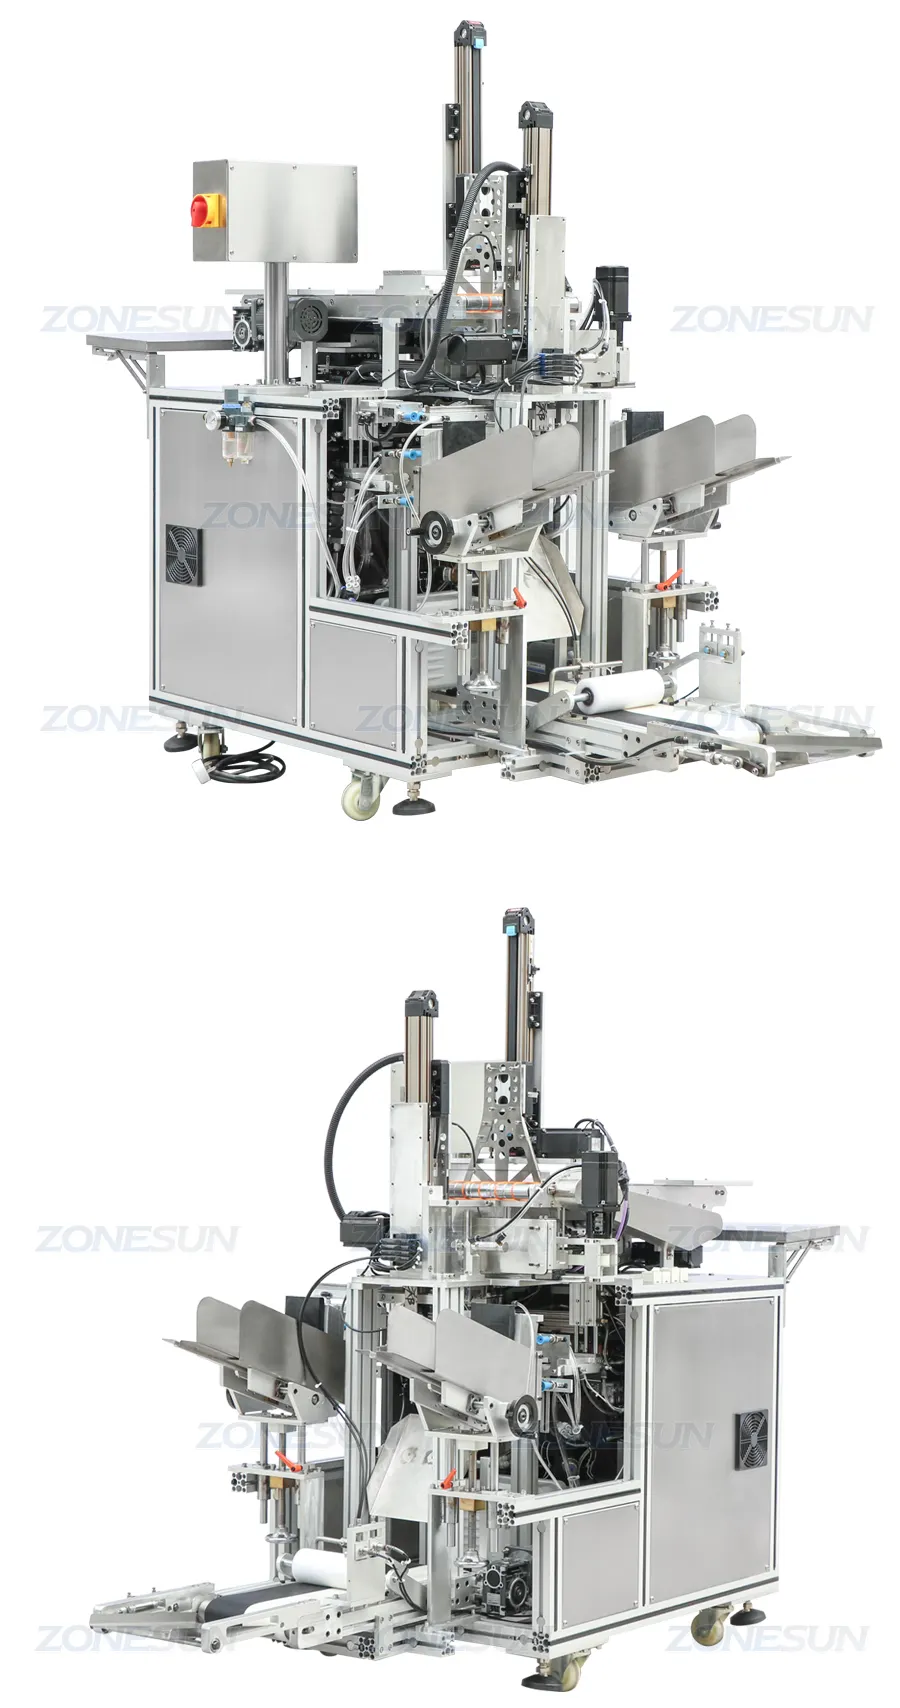 ZONESUN ZS-MS1TZD Máquina empacadora de láminas para mascarillas faciales de alta velocidad 